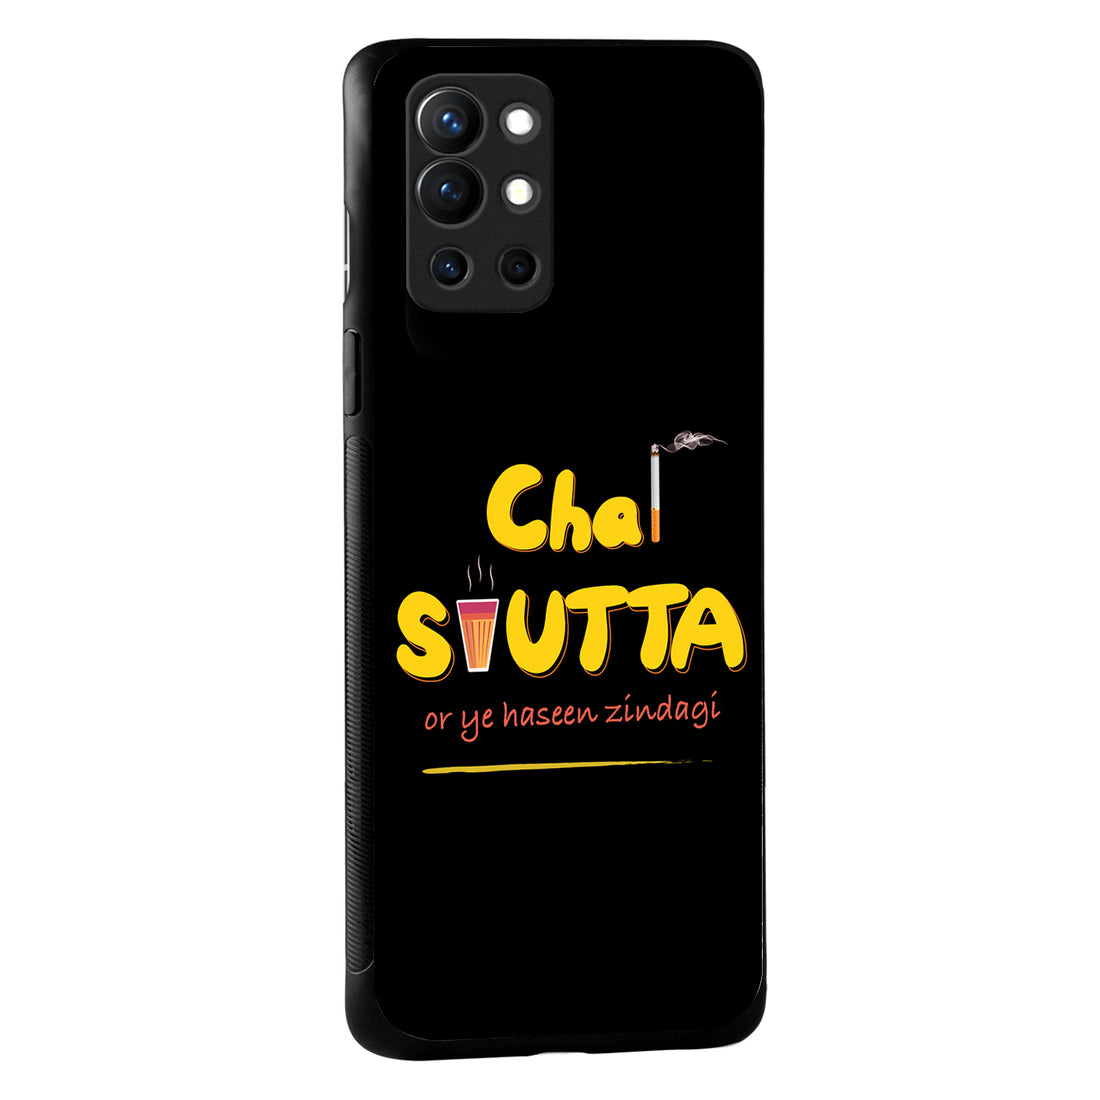 Chai-Sutta Motivational Quotes OnePlus 9 R Back Case